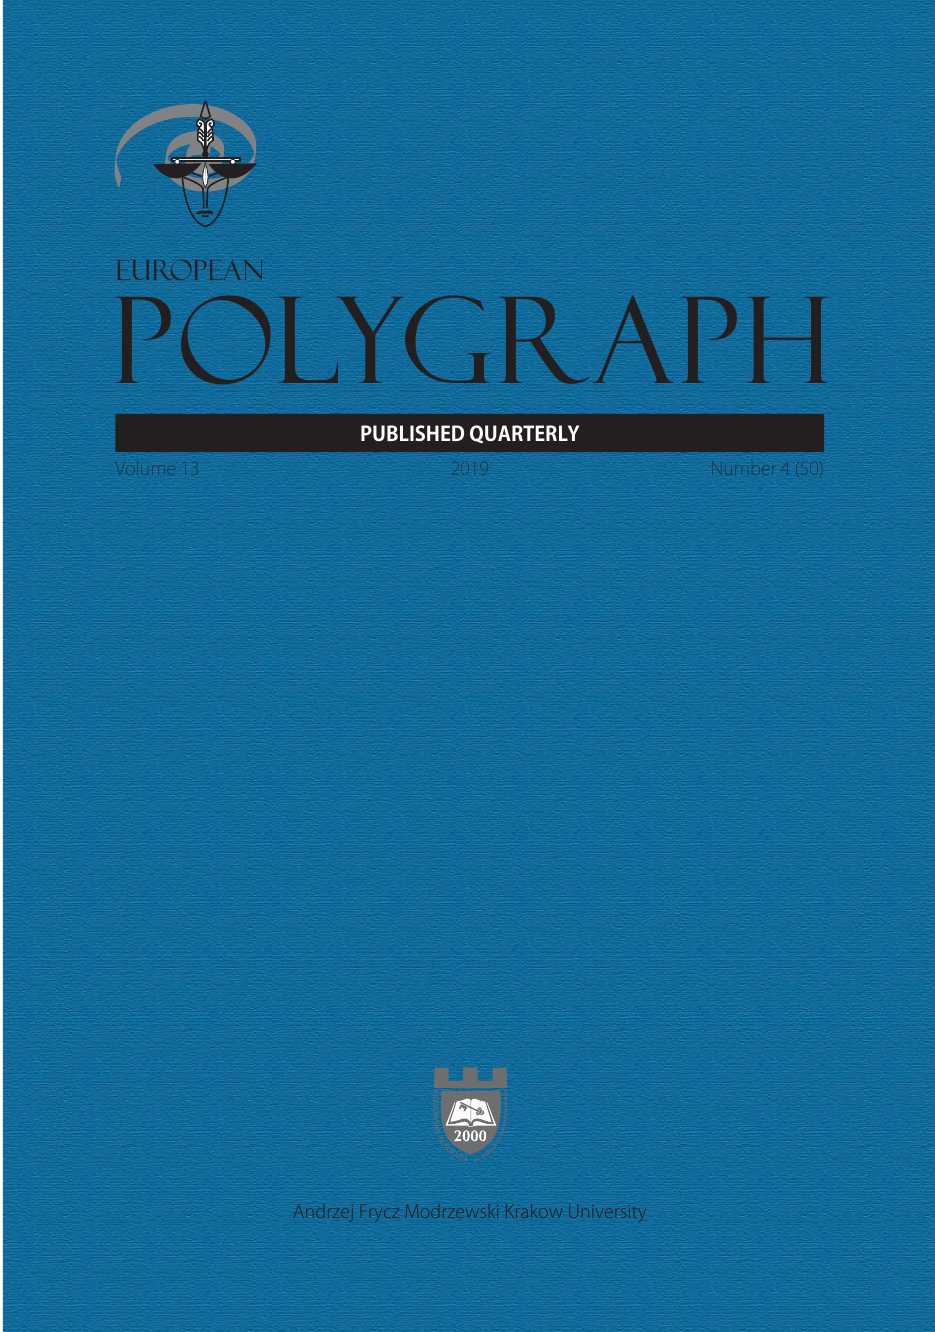 Izbrannye publikacii iz žurnala “Evropejskij Poligraf” (Selection of papers from [the journal] “European Polygraph”. Vypusk 1, 2019 (No. 1, 2019), Moscow 201